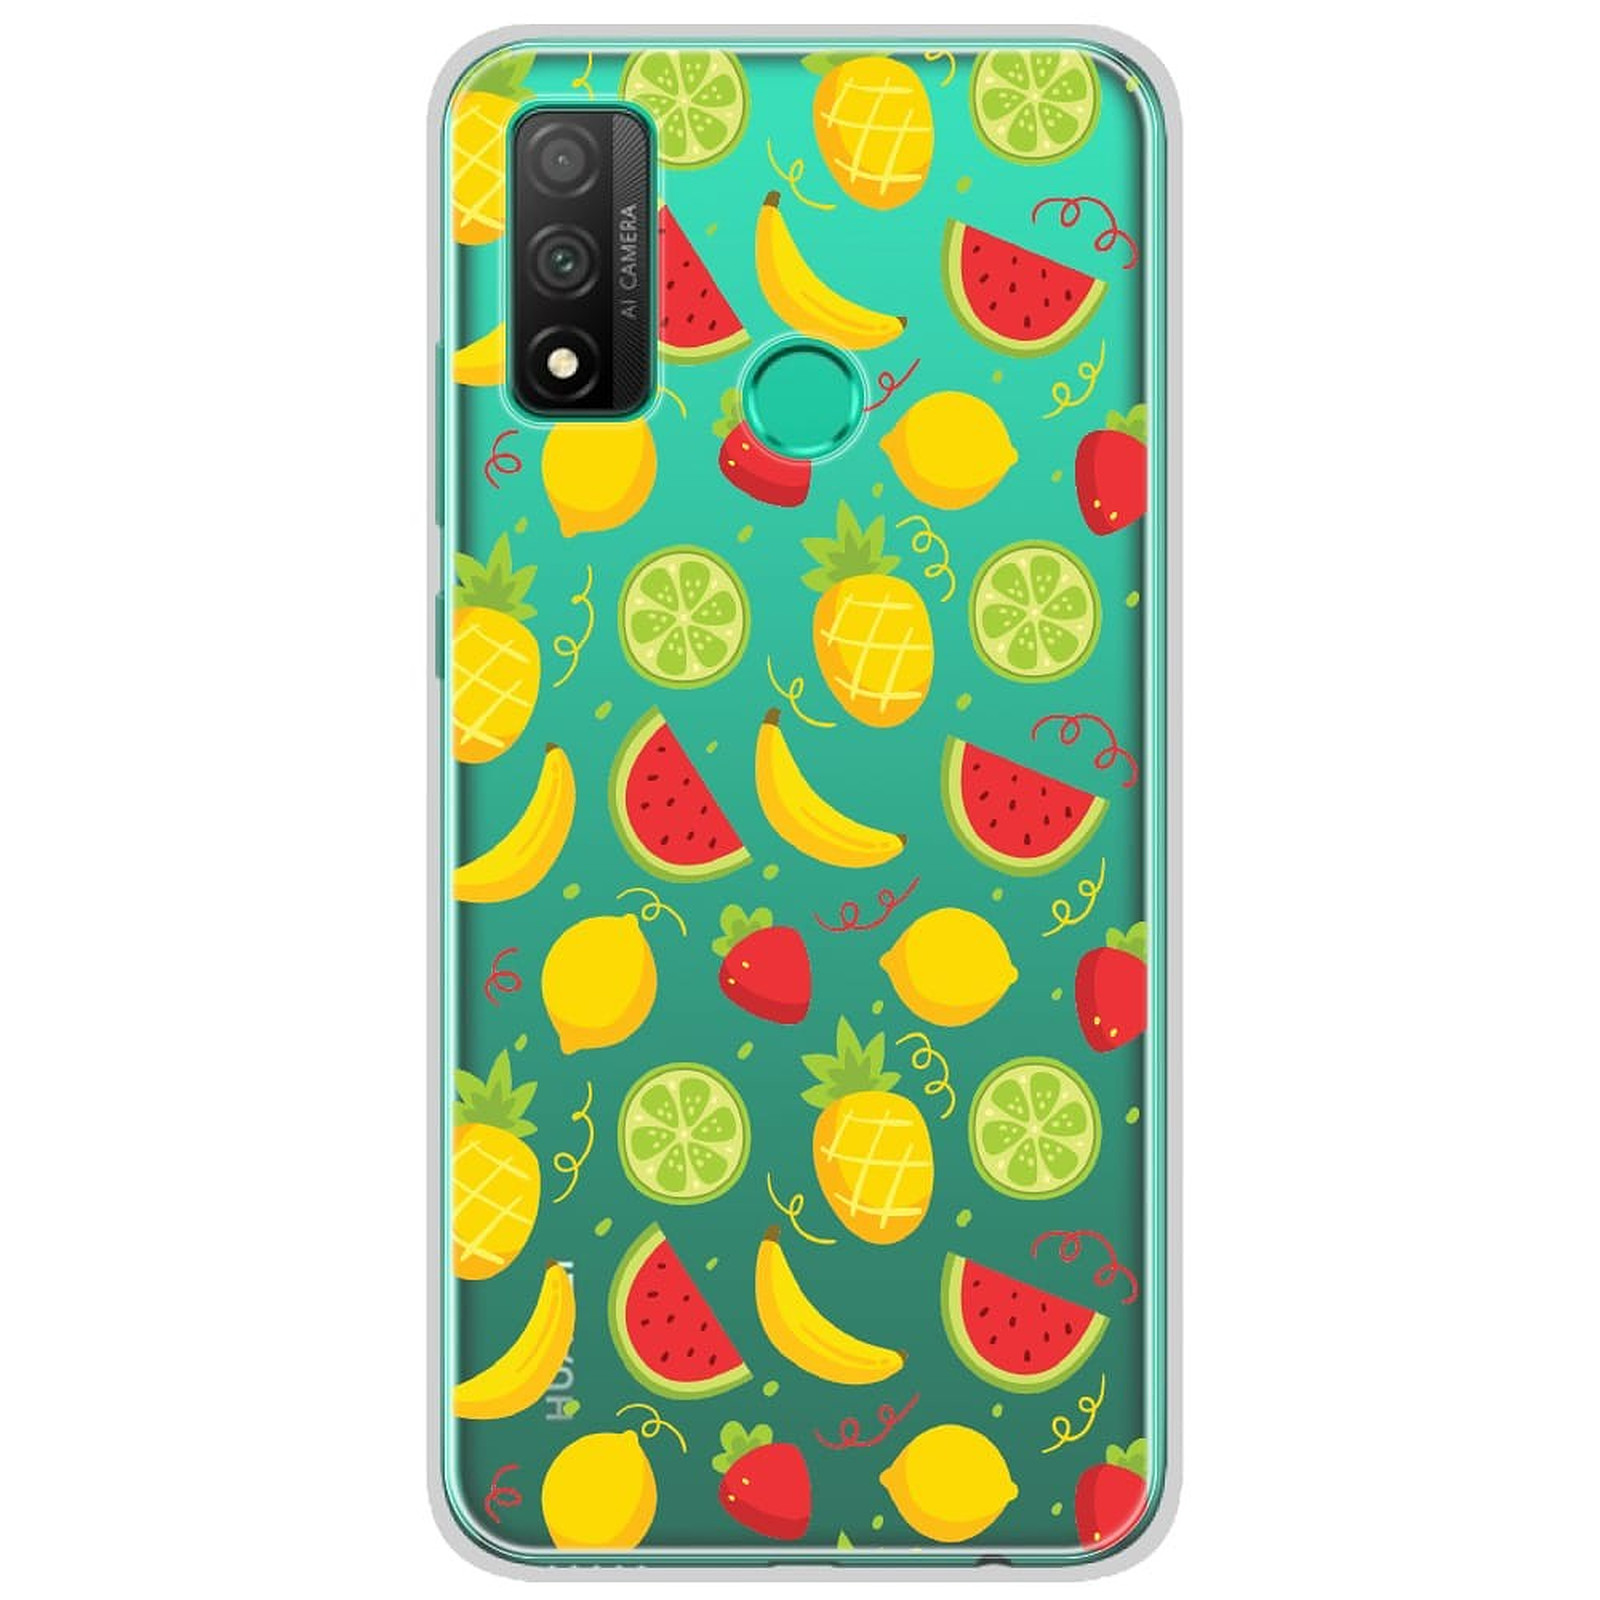 1001 Coques Coque silicone gel Huawei P Smart 2020 motif Fruits tropicaux - Coque telephone 1001Coques